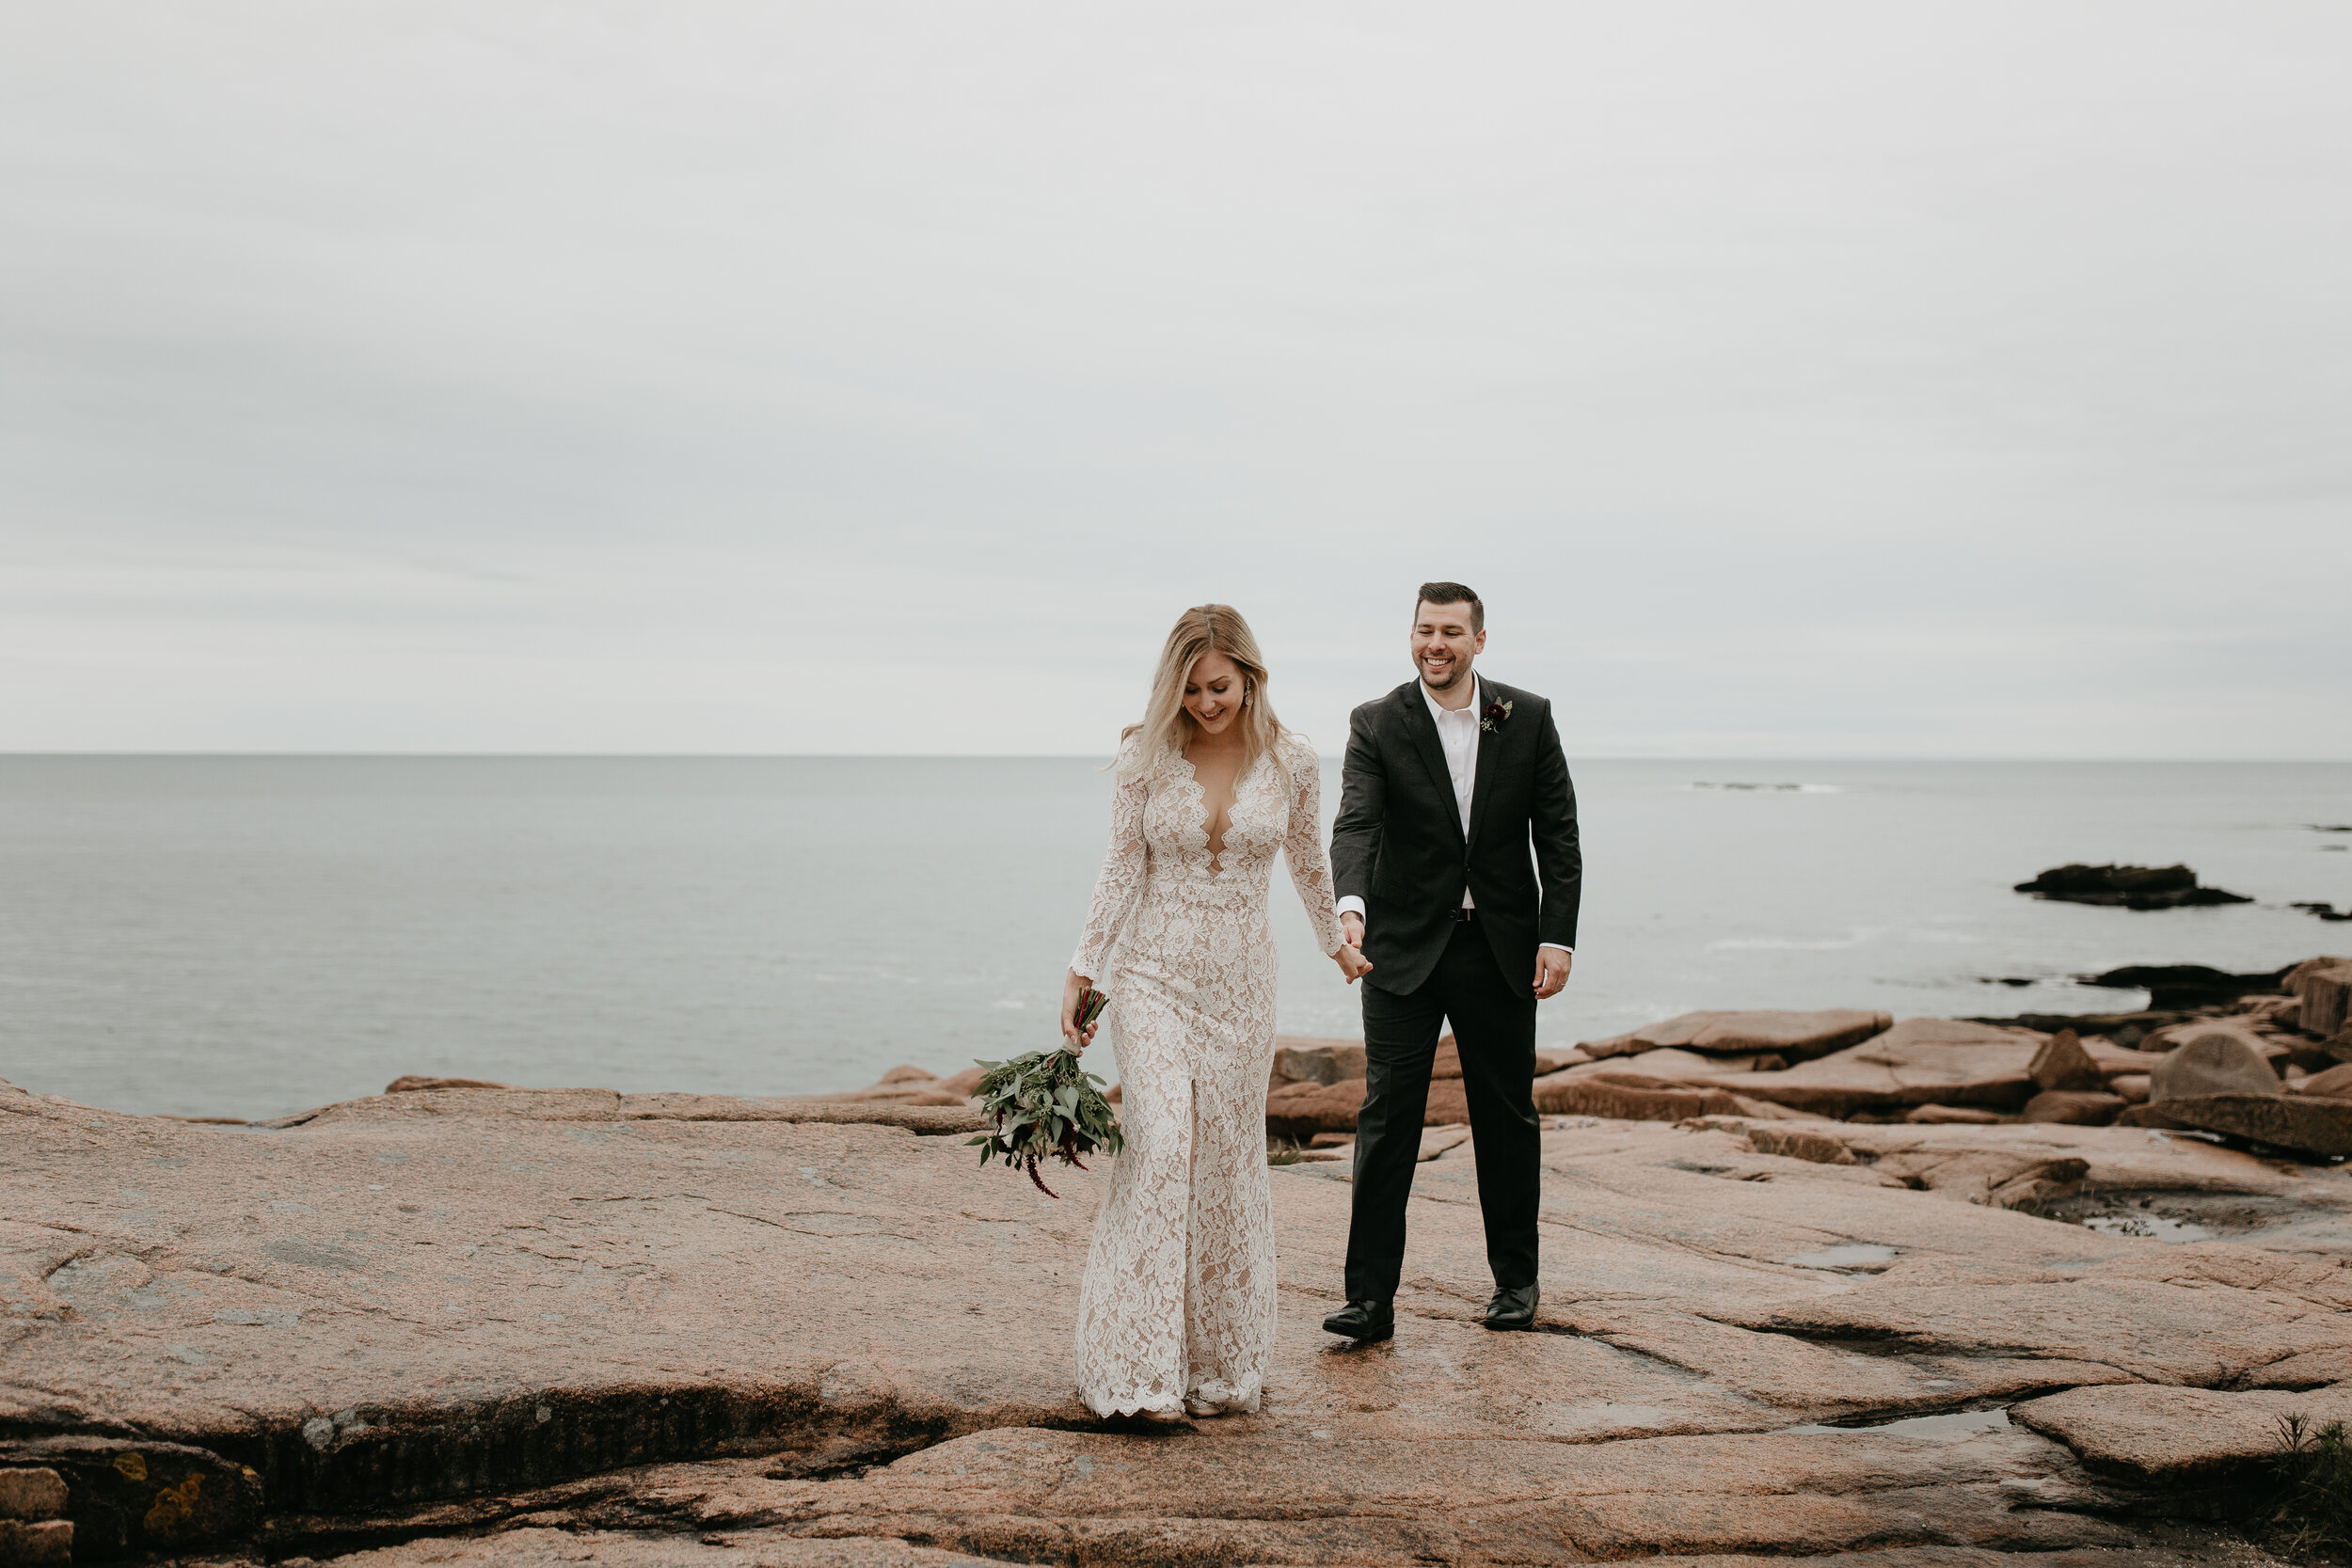 Nicole-Daacke-Photography-Acadia-national-park-elopement-photography-elopement-in-acadia-inspiration-maine-intimate-wedding-destination-elopement-photographer-rainy-day-maine-coast-bar-harbor-elopement-photography-167.jpg